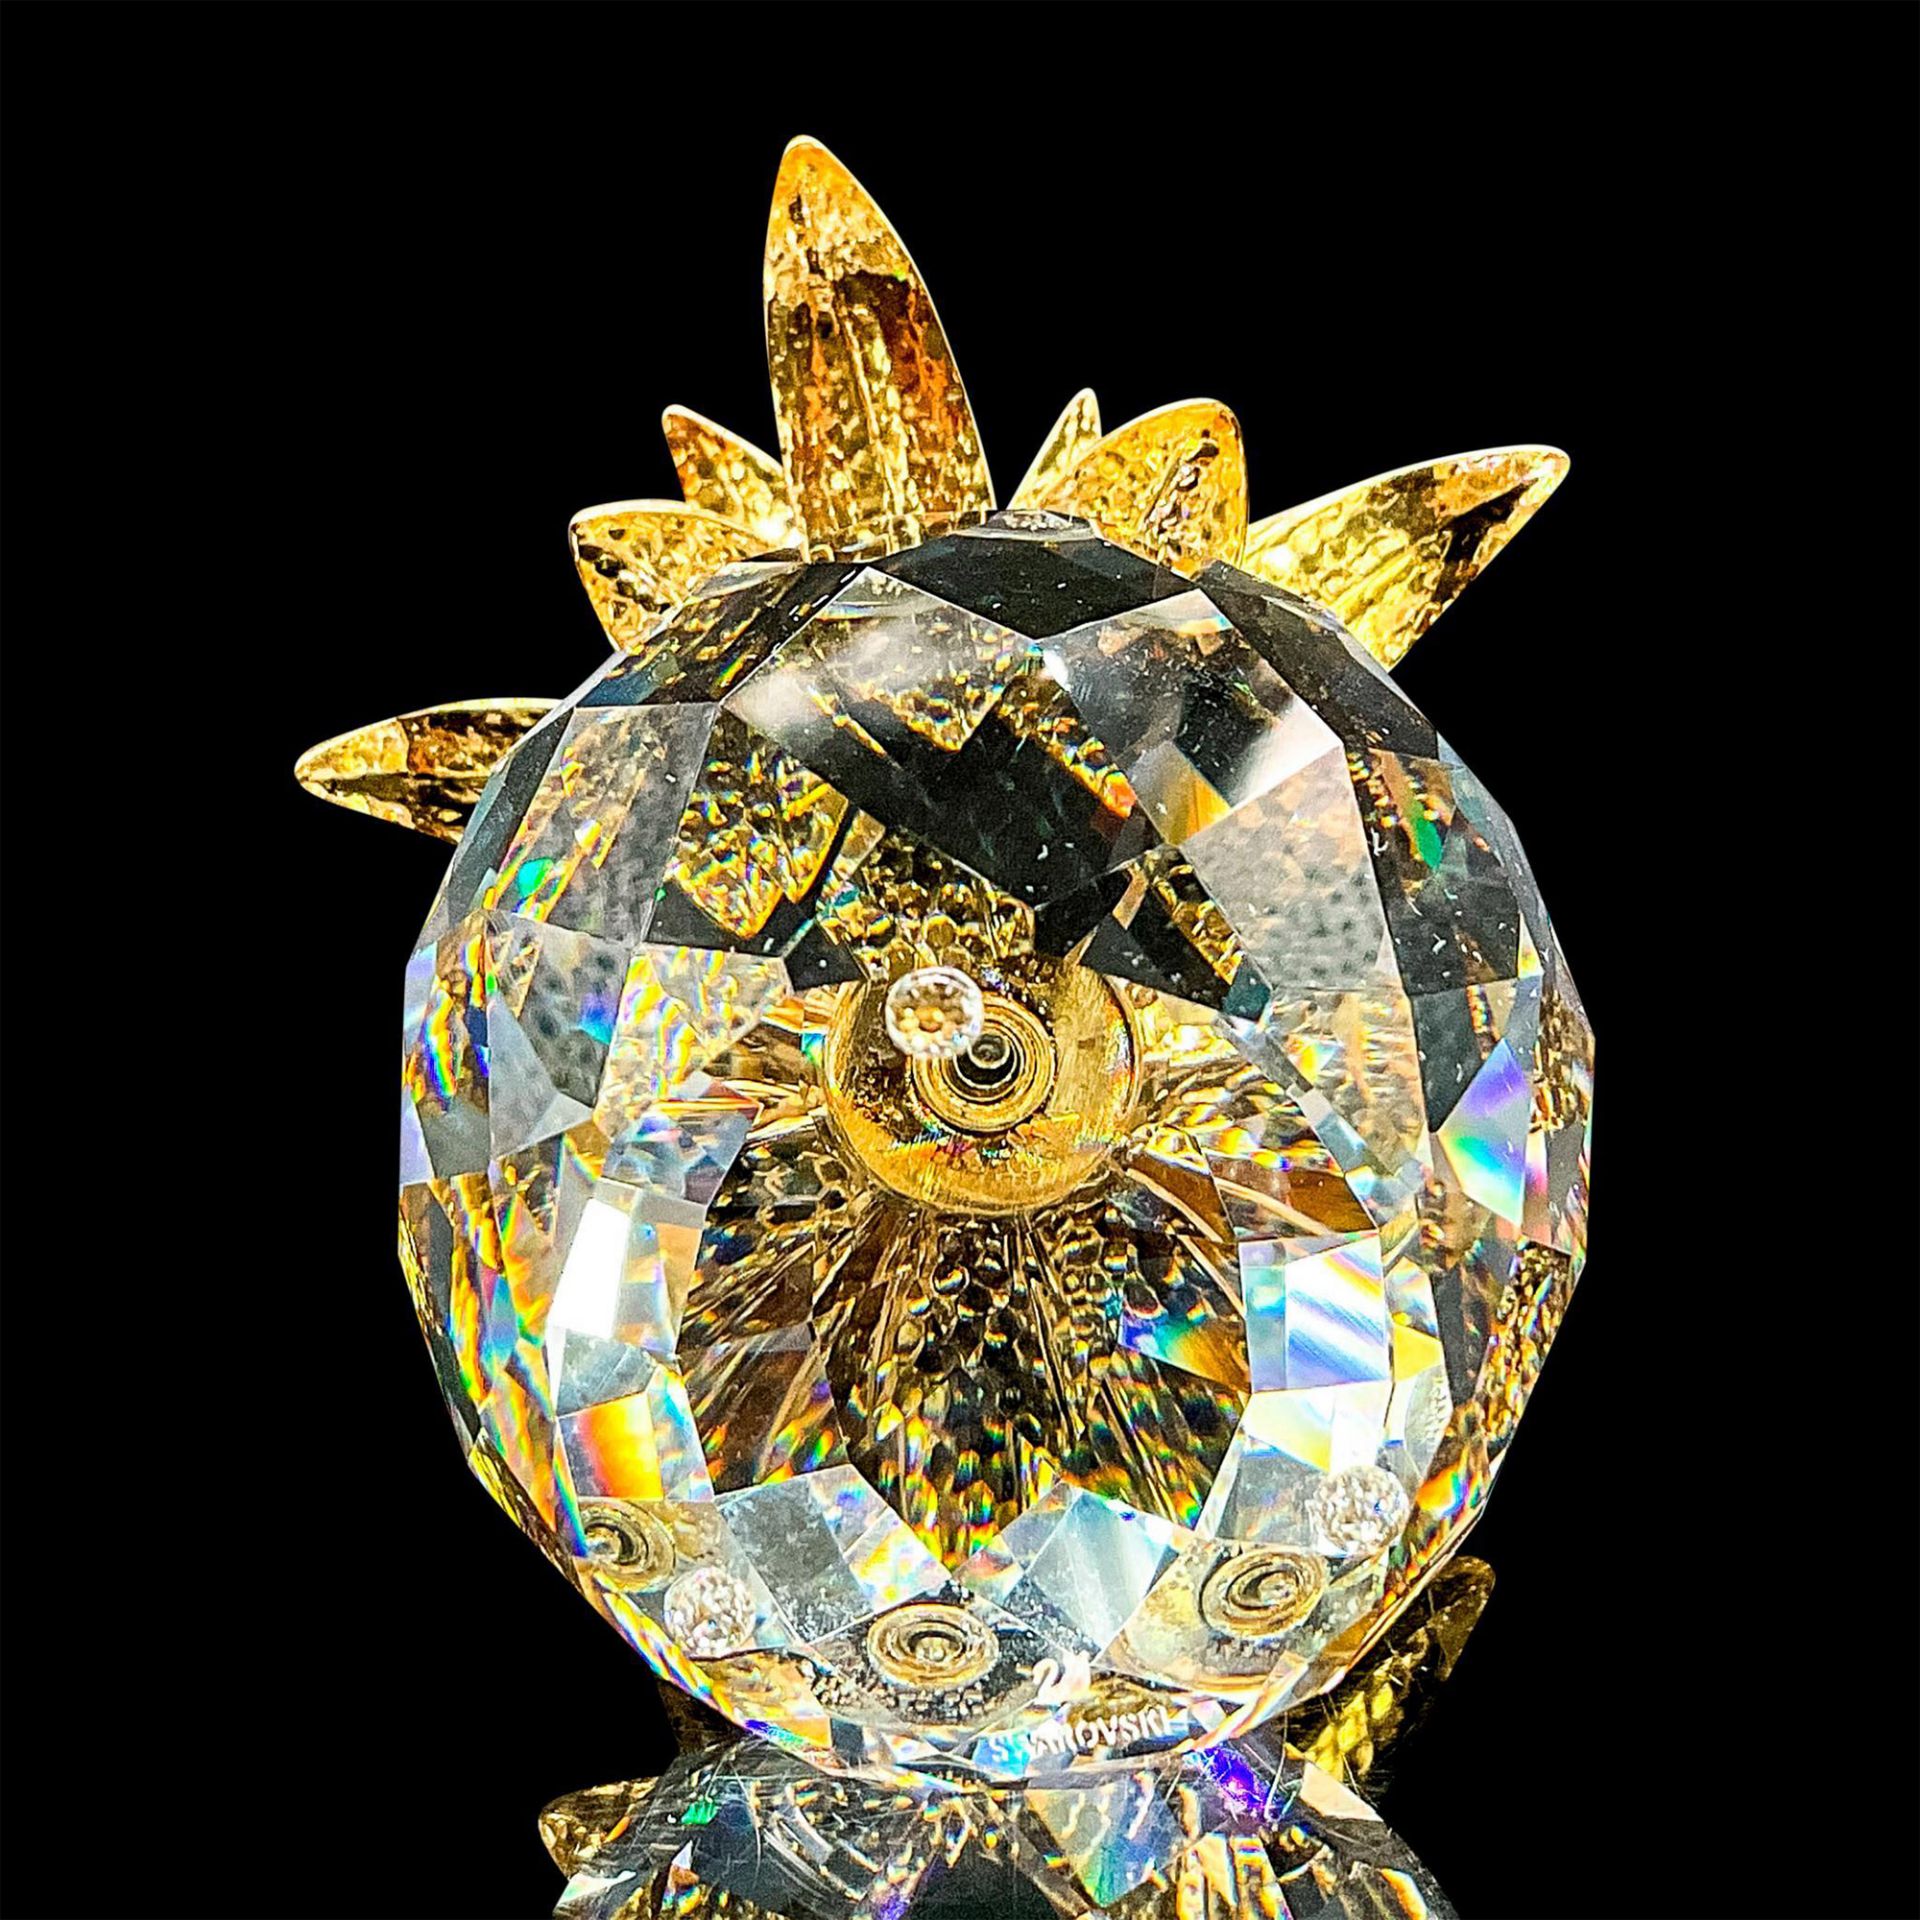 Swarovski Crystal Figurine, Pineapple With Golden Leaves - Image 3 of 4